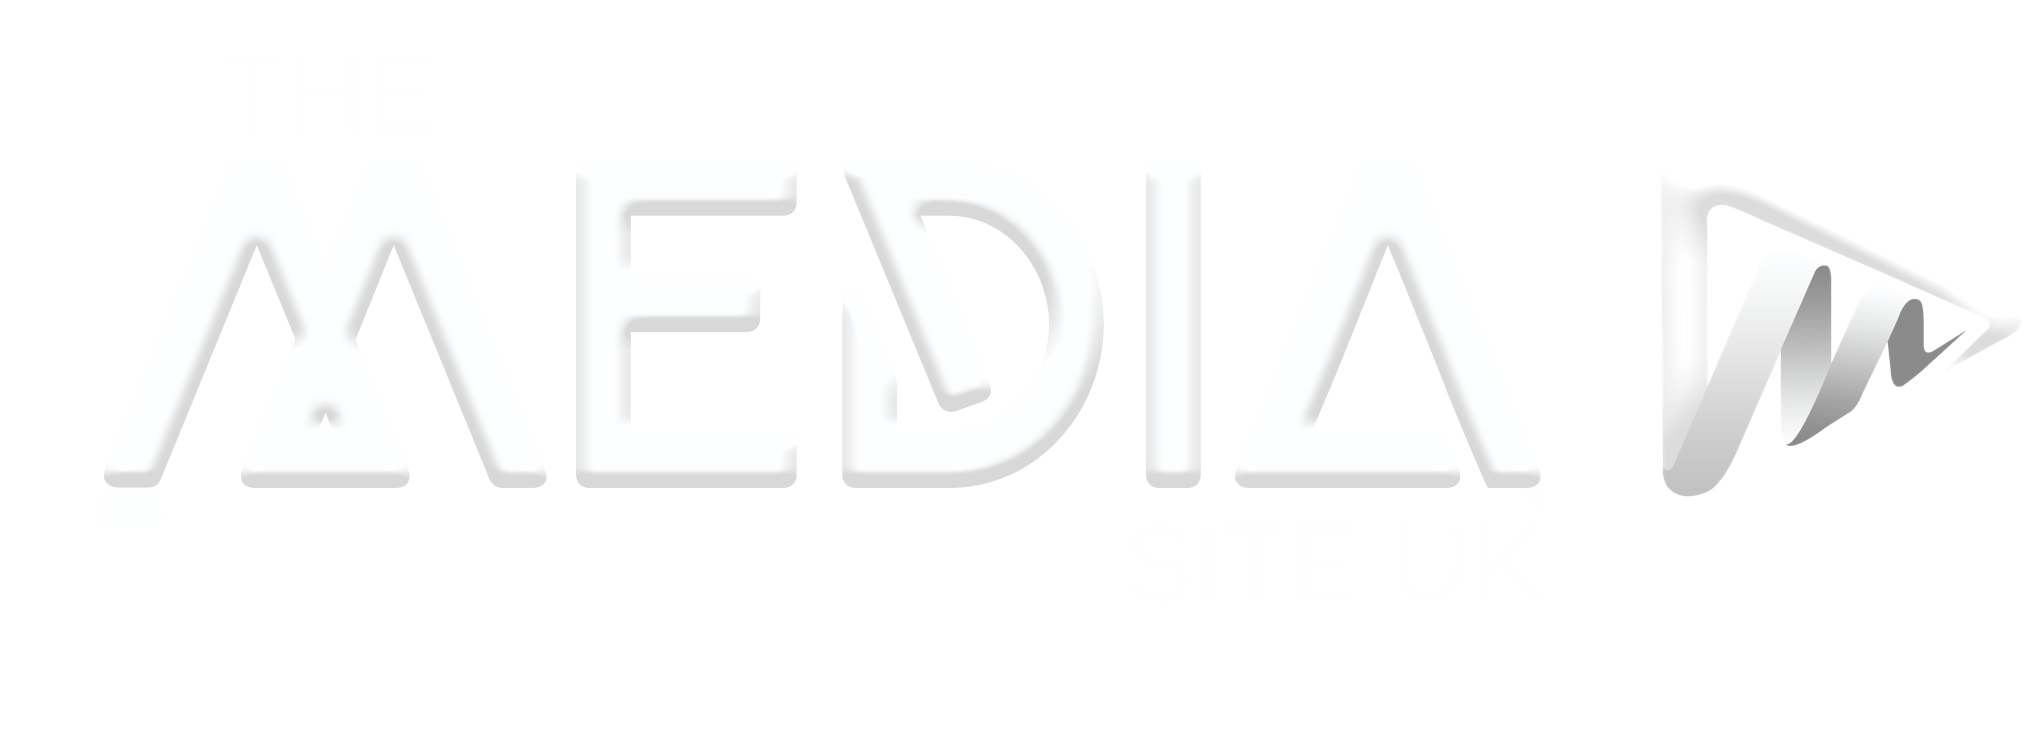 The Mediasite Uk